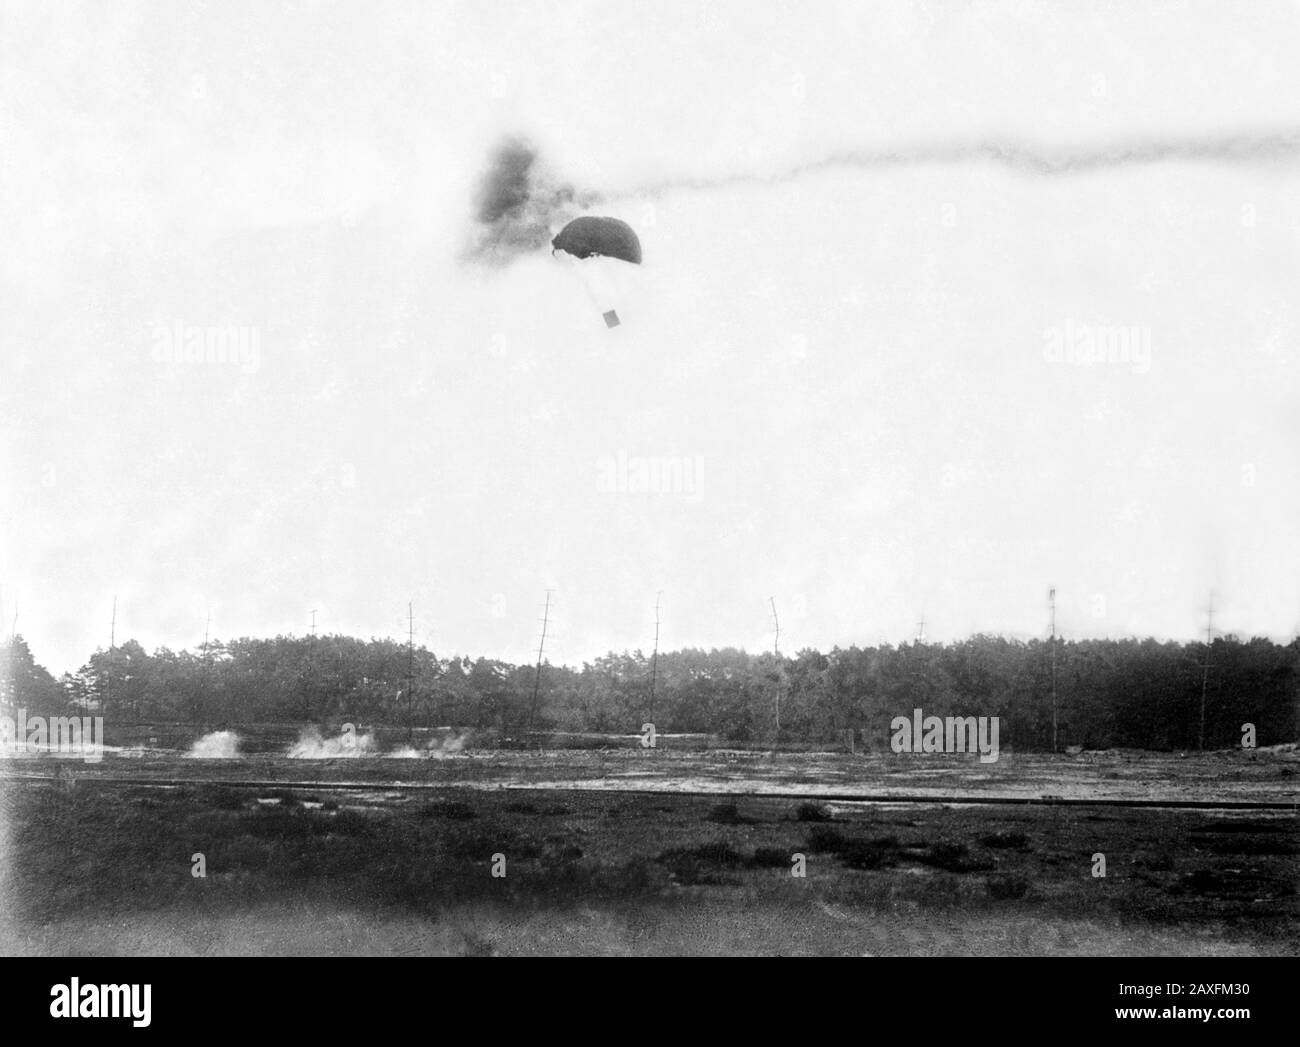 1915 ca , GERMANY : The german cannon Krupp   balloon gun . In this photo a Balloon wrecked by Krupp gun- ARMI - ARMA - FRIEDERICH KRUPP - CANNONE - GUN  -  INDUSTRIA - DINASTIA INDUSTRIALE - FABBRICA - ARCHITETTURA - ARCHITECTURE  - HISTORY -  foto storica - INDUSTRY - INDUSTRIA - CANNONE - ACCIAIO - ACCIAIERIA ---- ARCHIVIO GBB Stock Photo